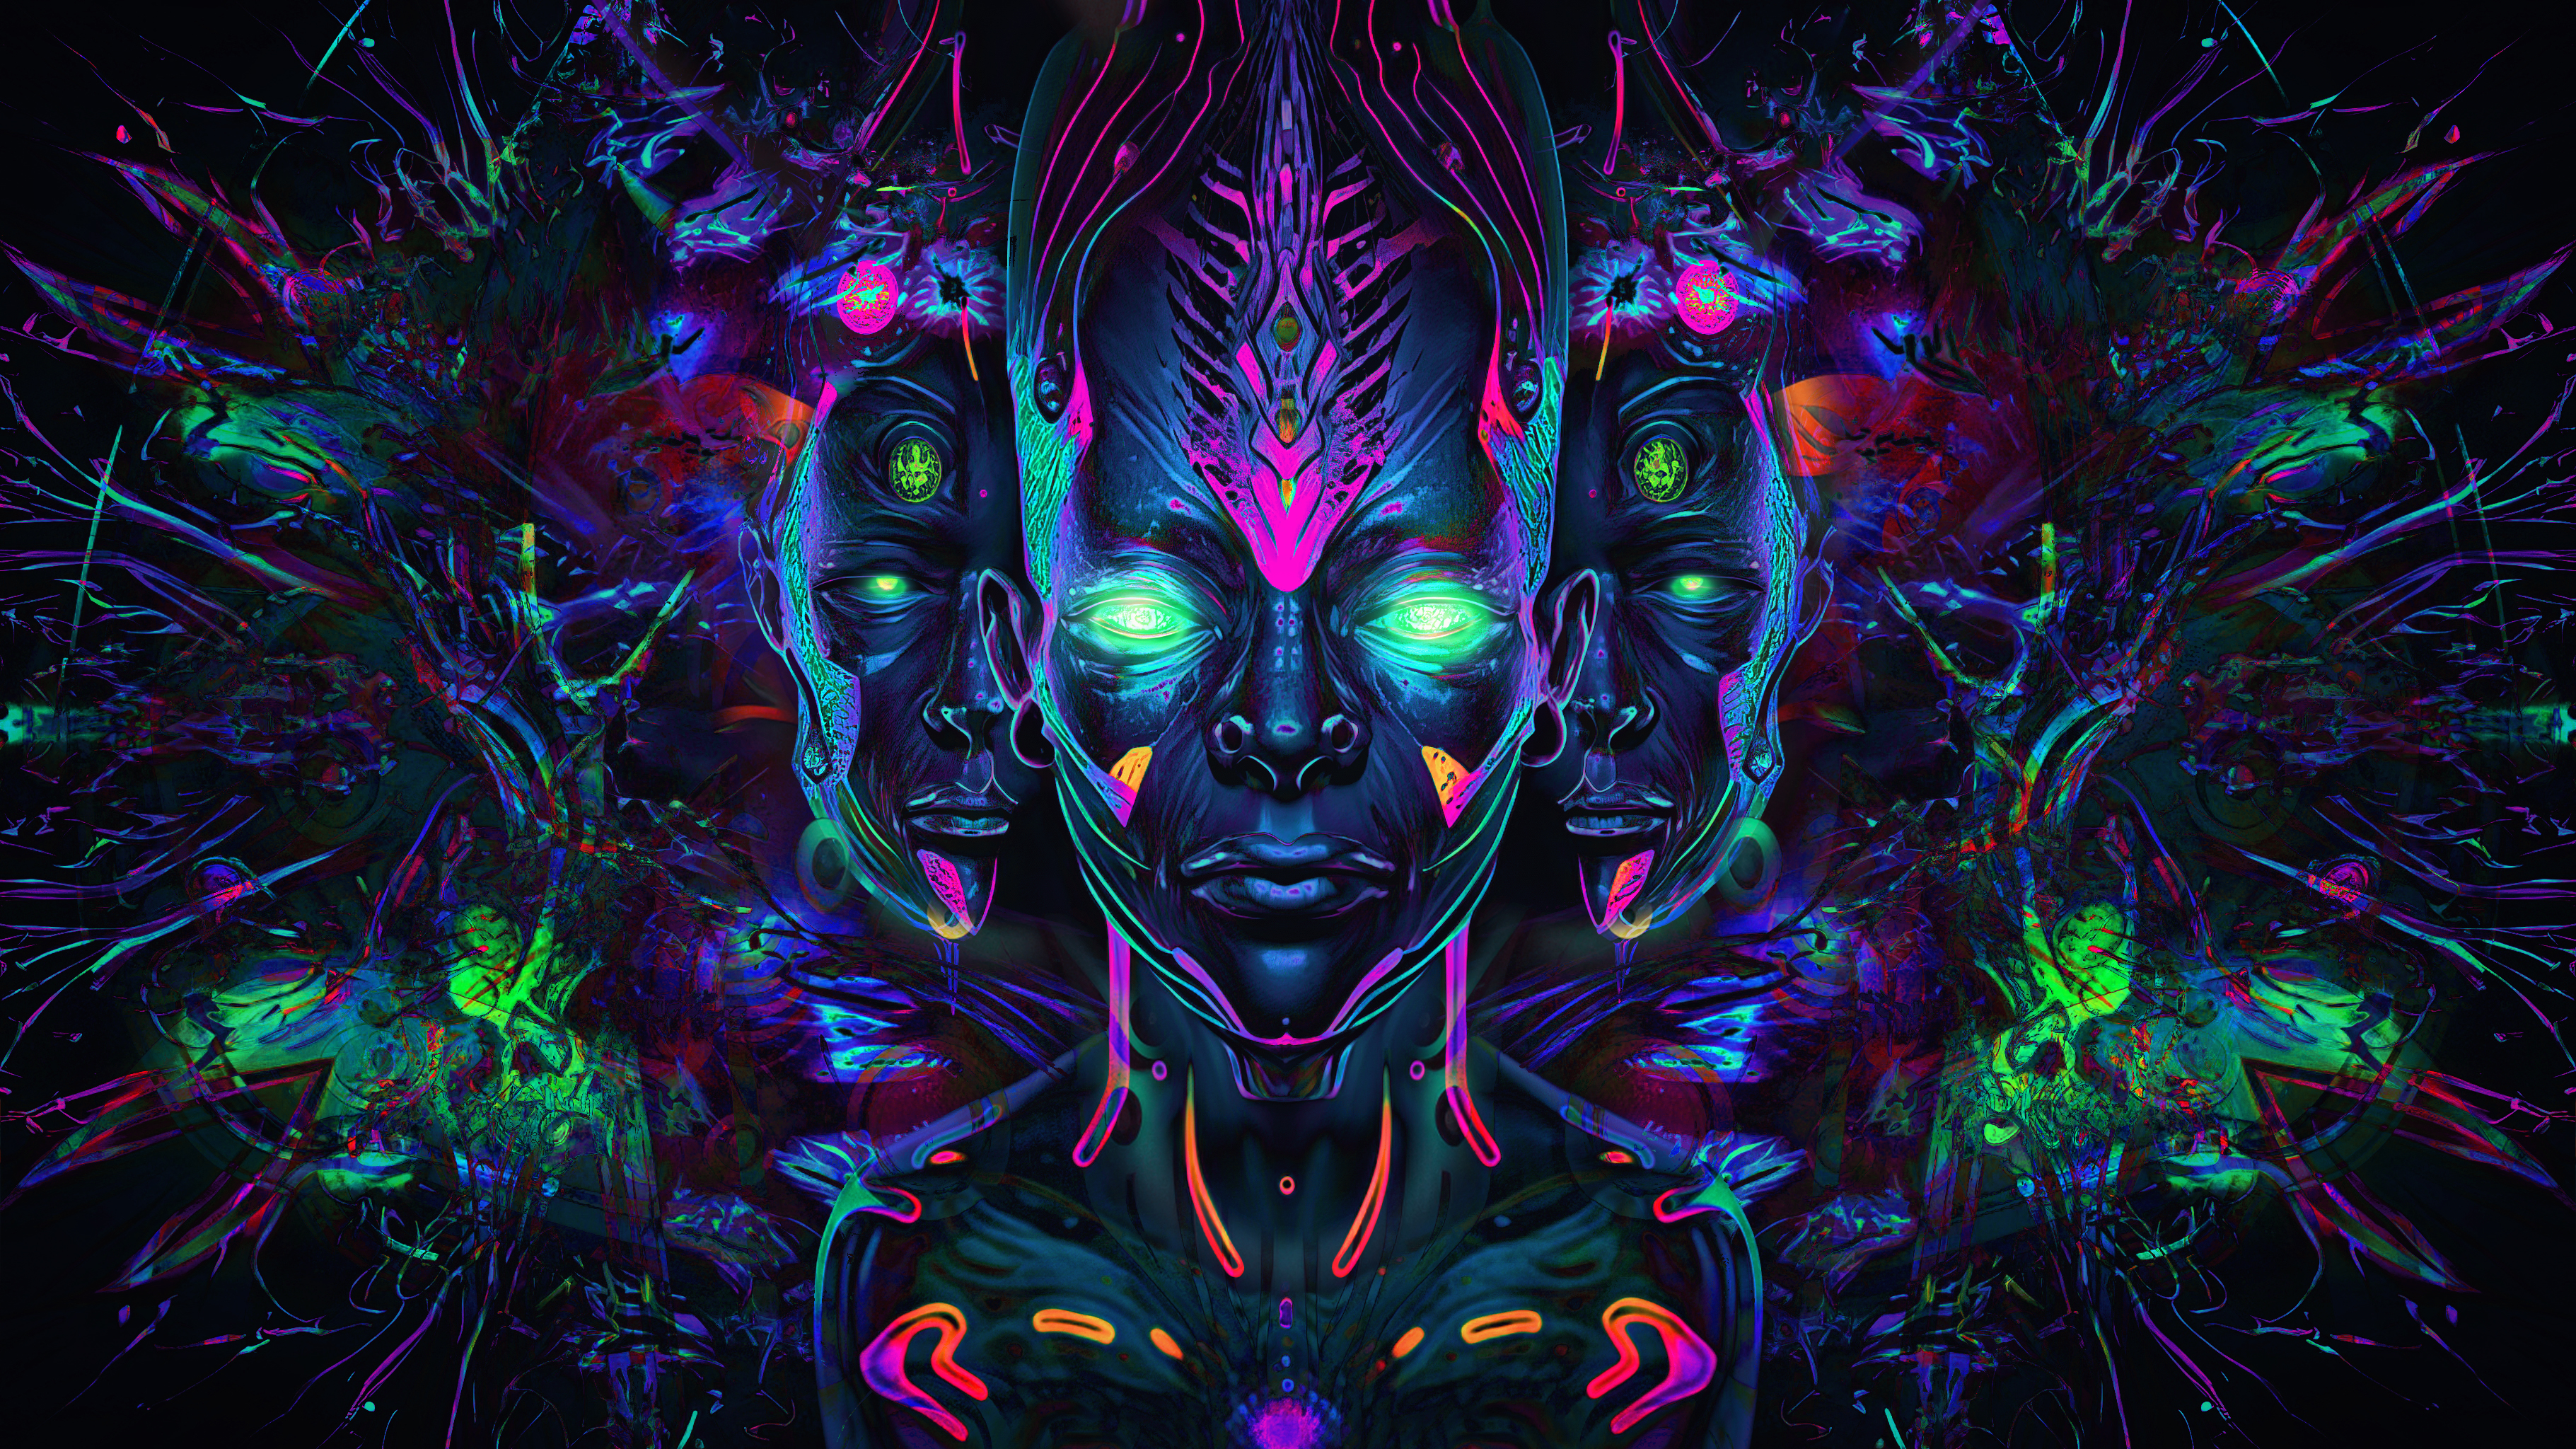 Crystal Head Aliens Trippy Psychedelic Colorful Glowing Eyes Looking At Viewer Digital Art 3642x2048